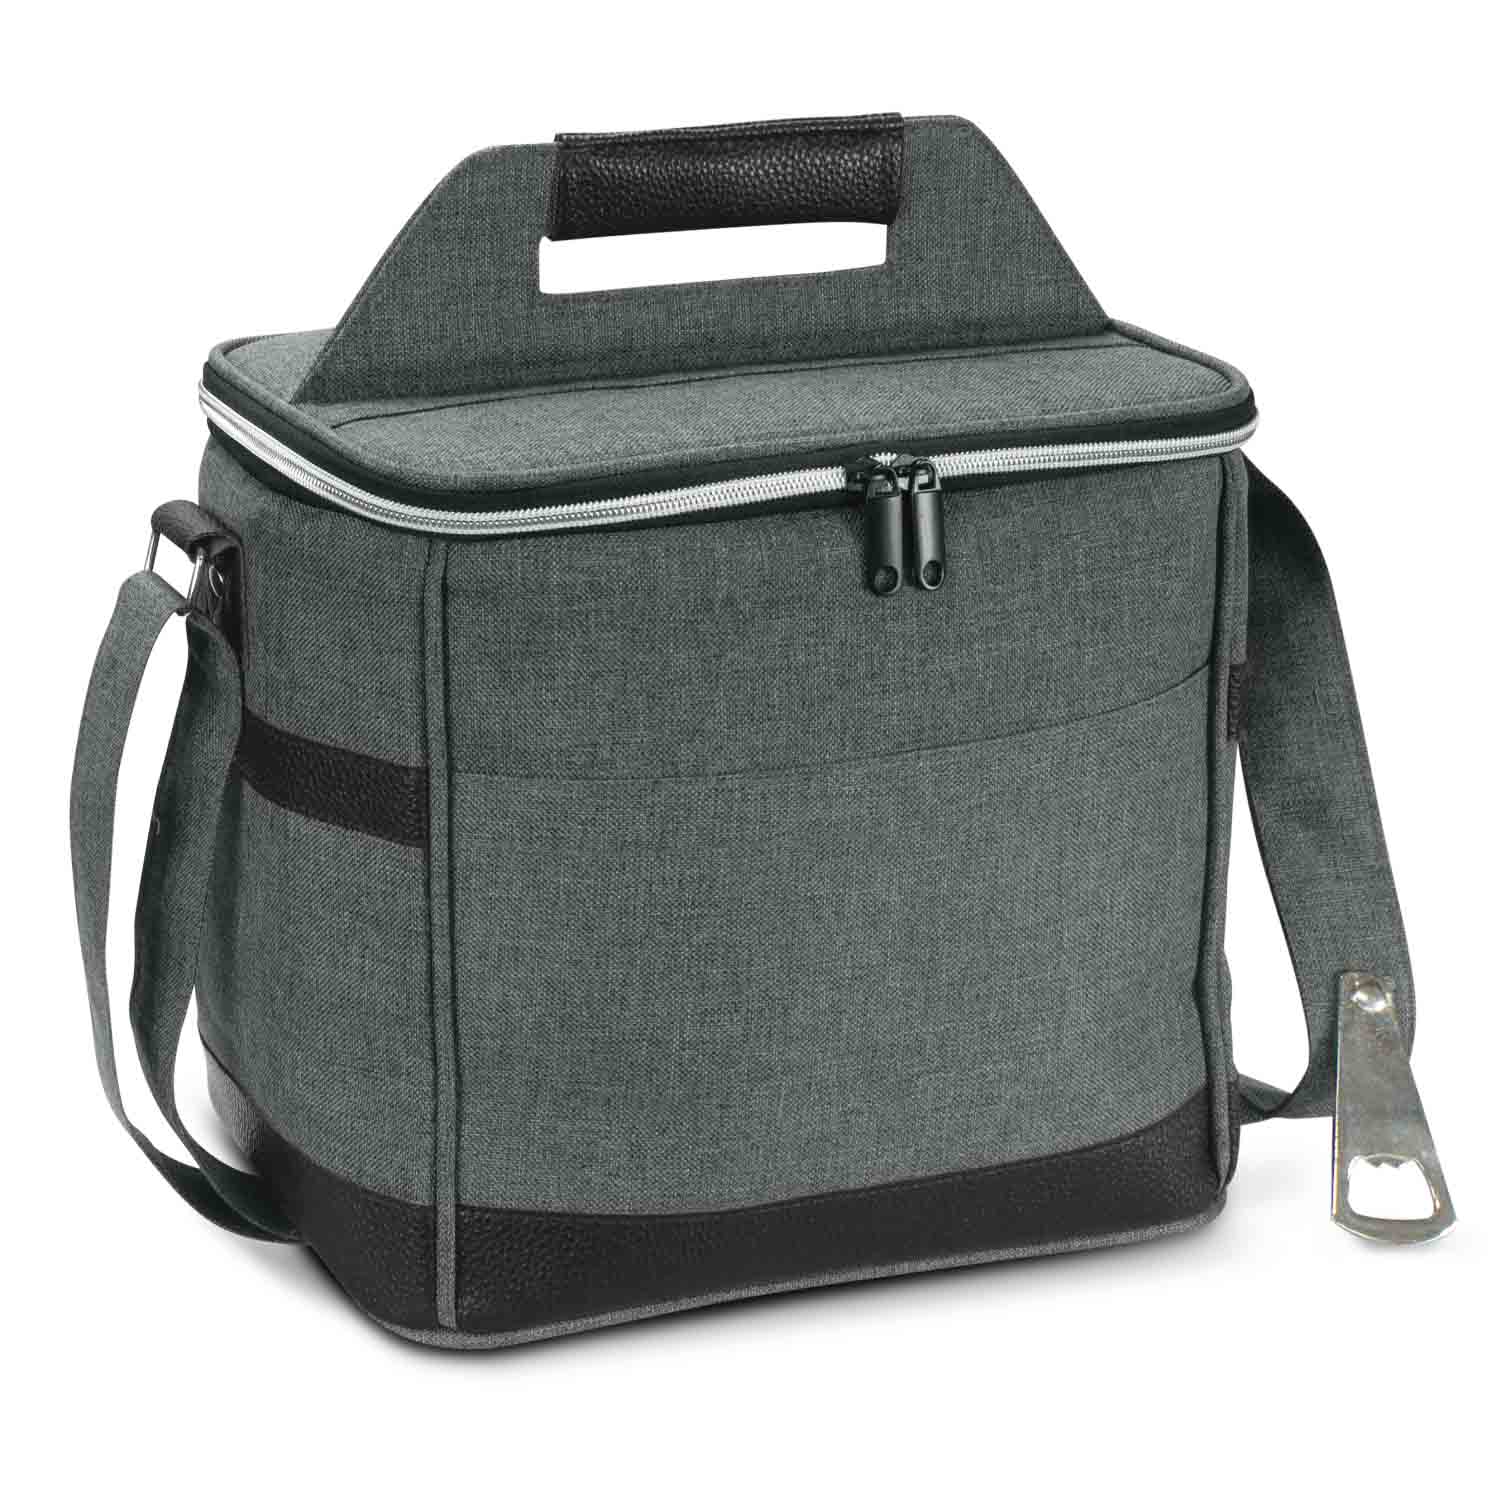 Custom Cooler Bags Online in Canberra